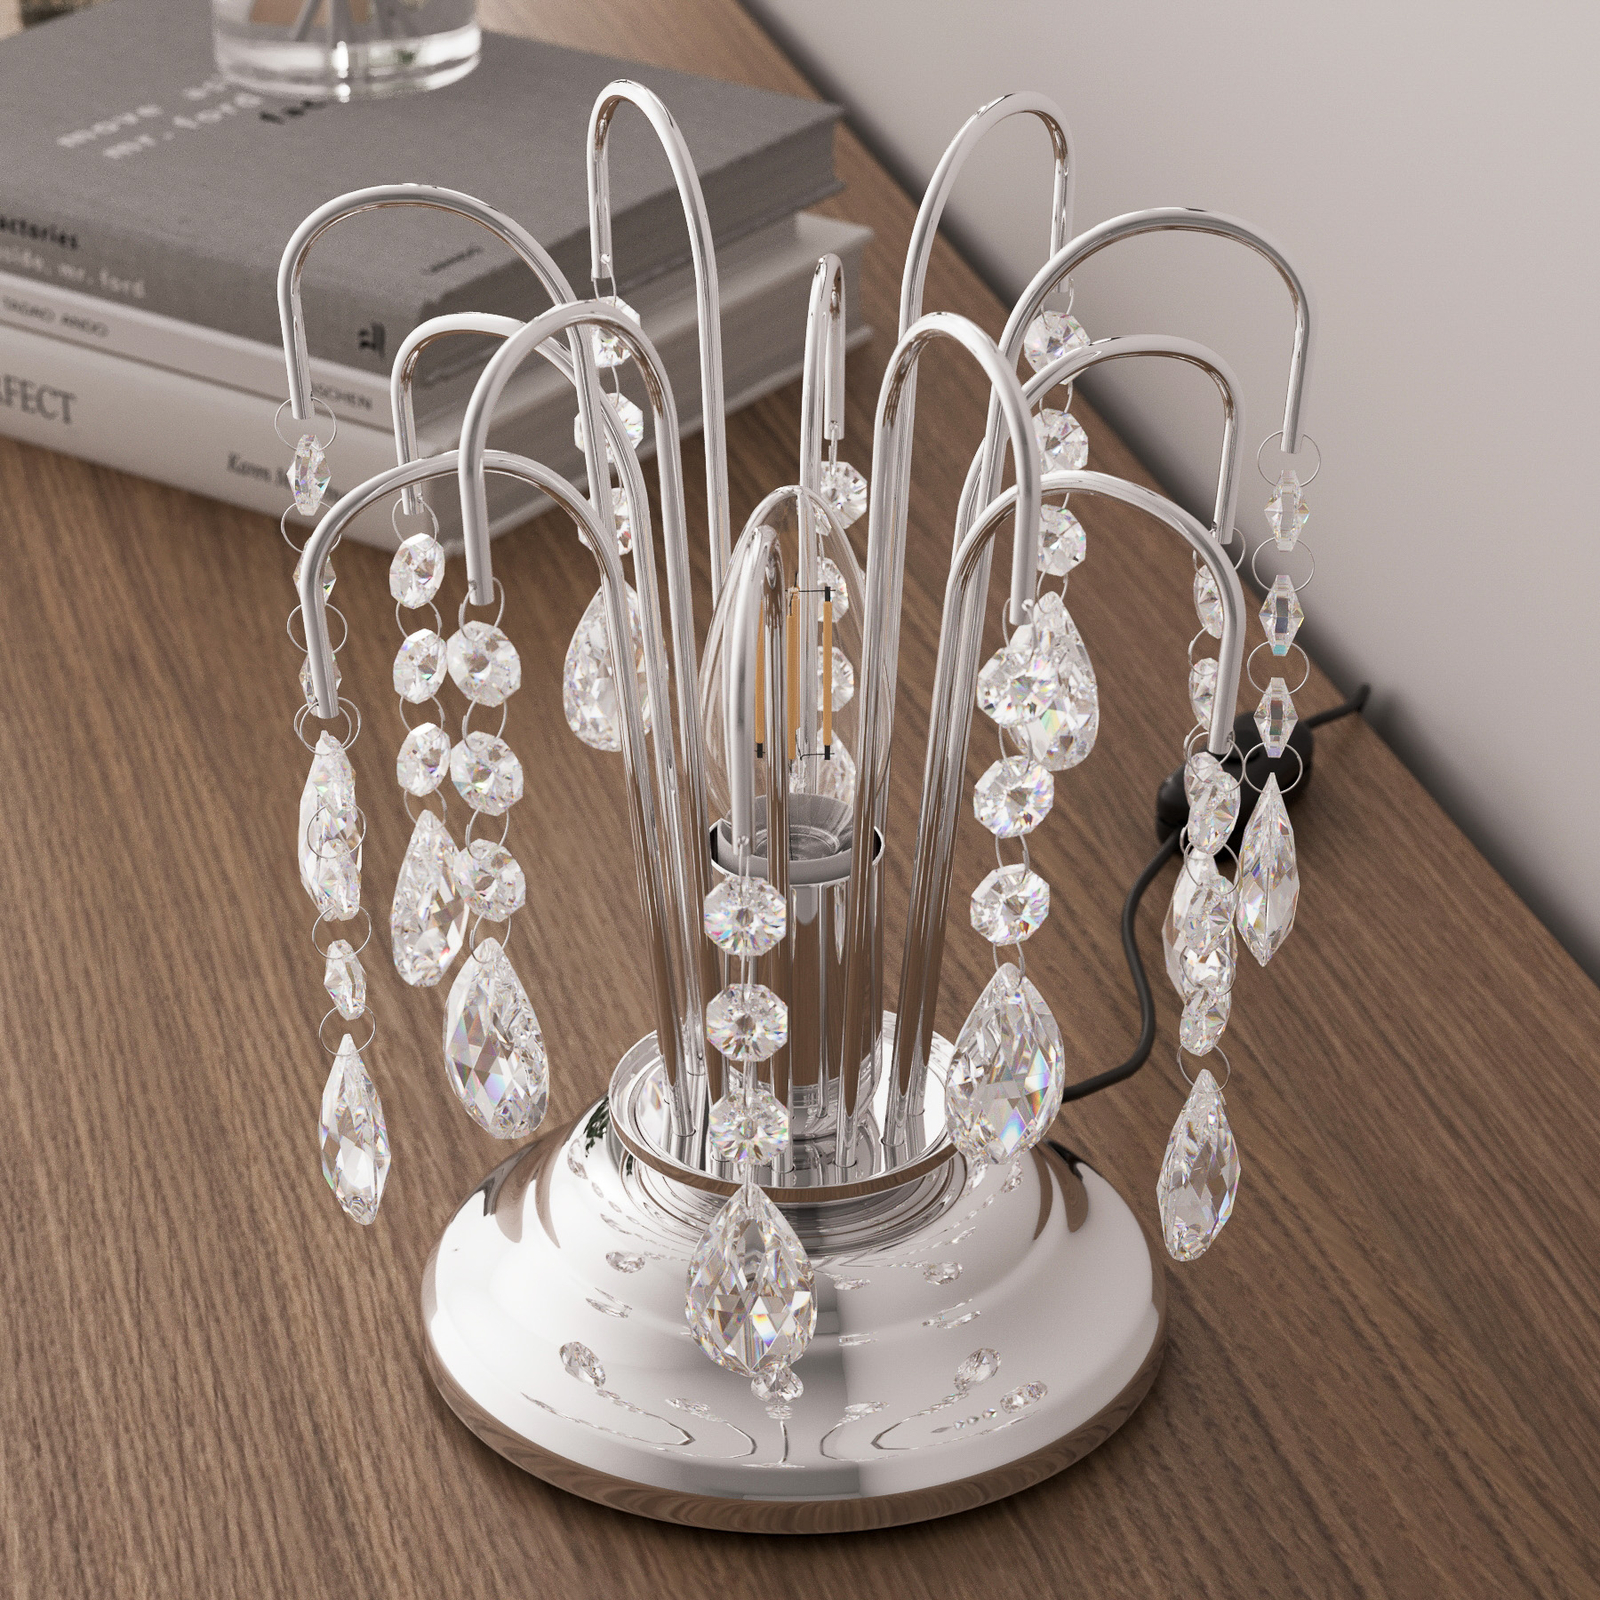 Pioggia asztali lámpa kristály esővel, 26cm, króm, króm